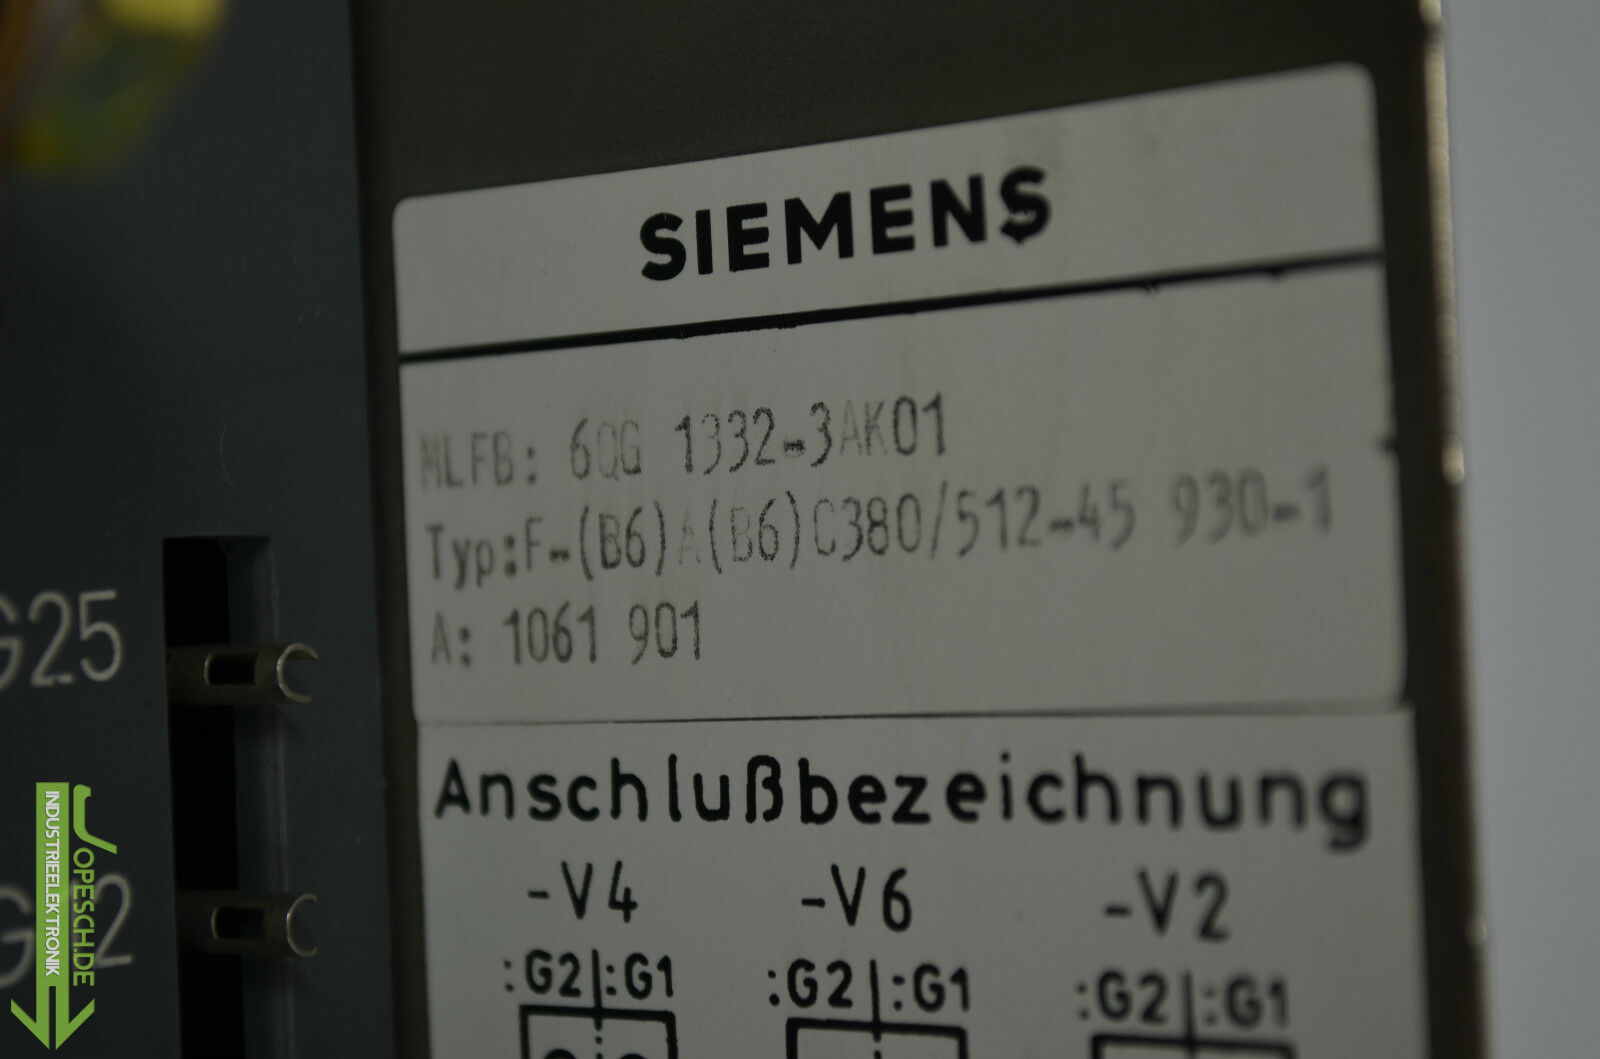 Siemens sitor 6QG1332-3AK01 